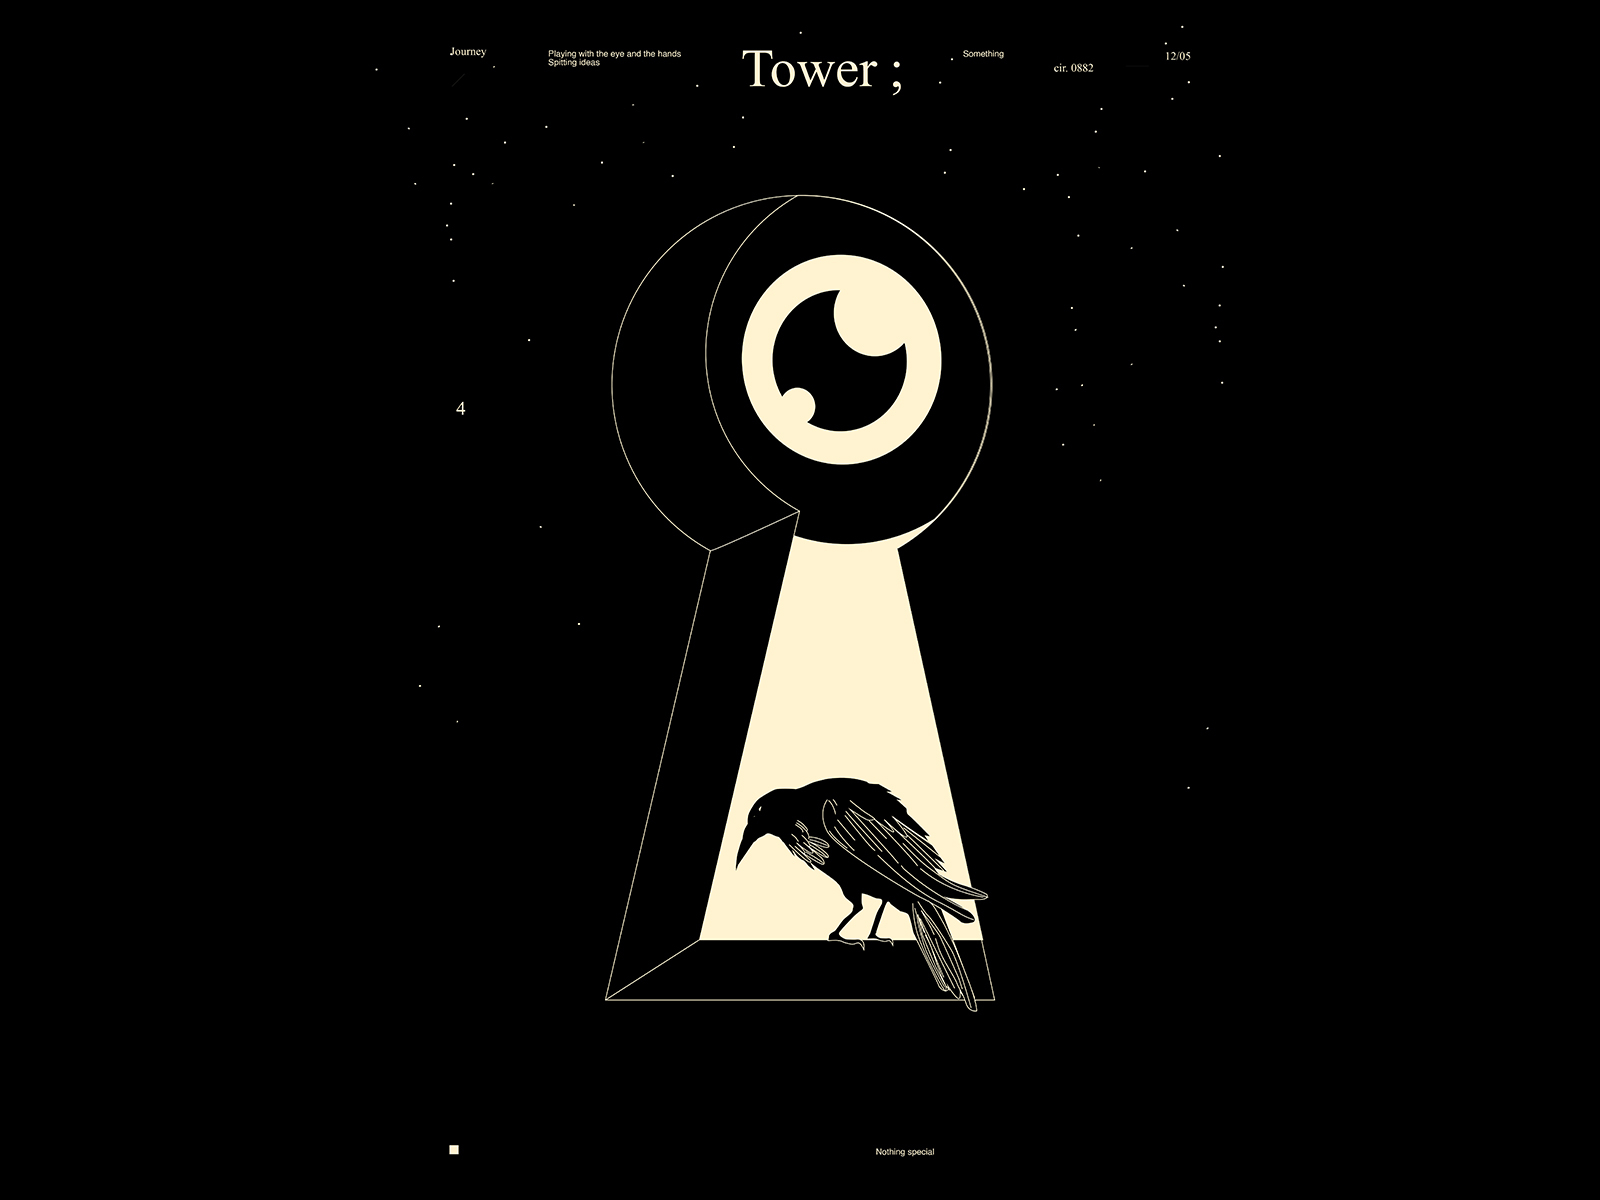 Tower abstract bird bird illustration composition crow crow illustration eye eye illustration eyeball illustration key keyhole laconic lines minimal poster poster art sky tower